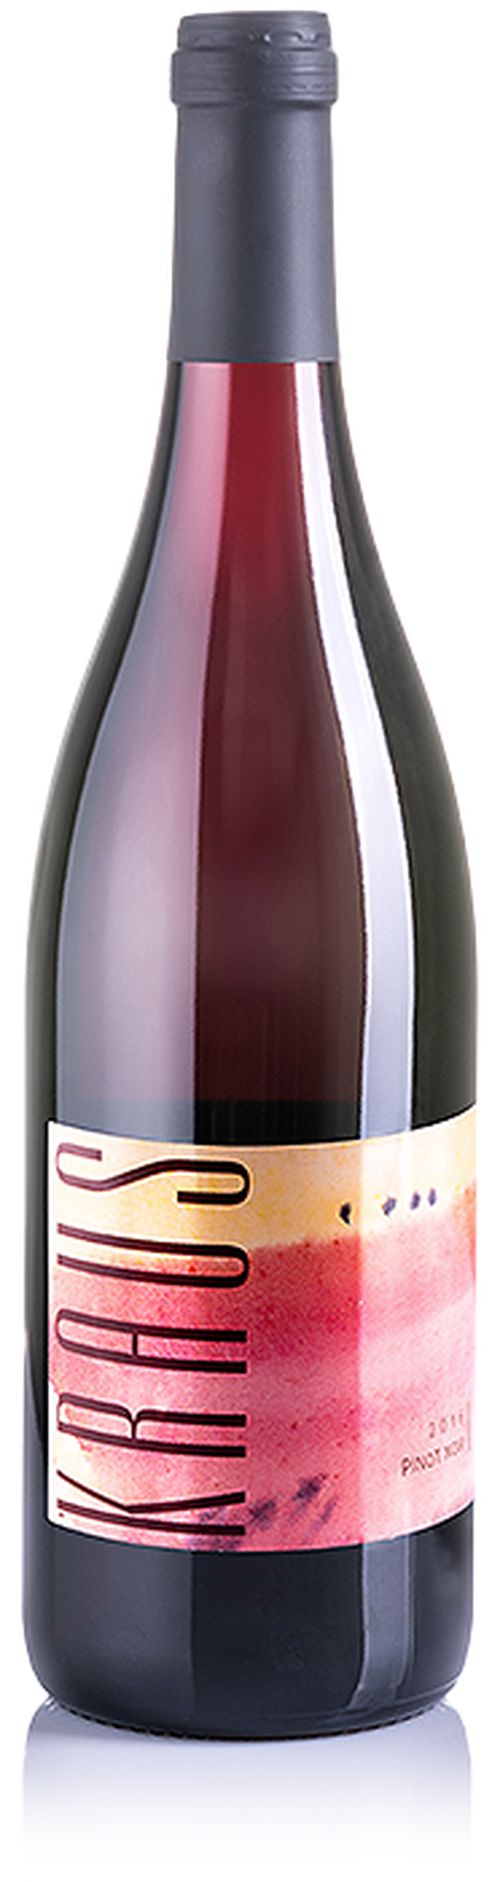 Kraus Premium Pinot noir Klamovka Barrique 2016 0,75l 12,5%